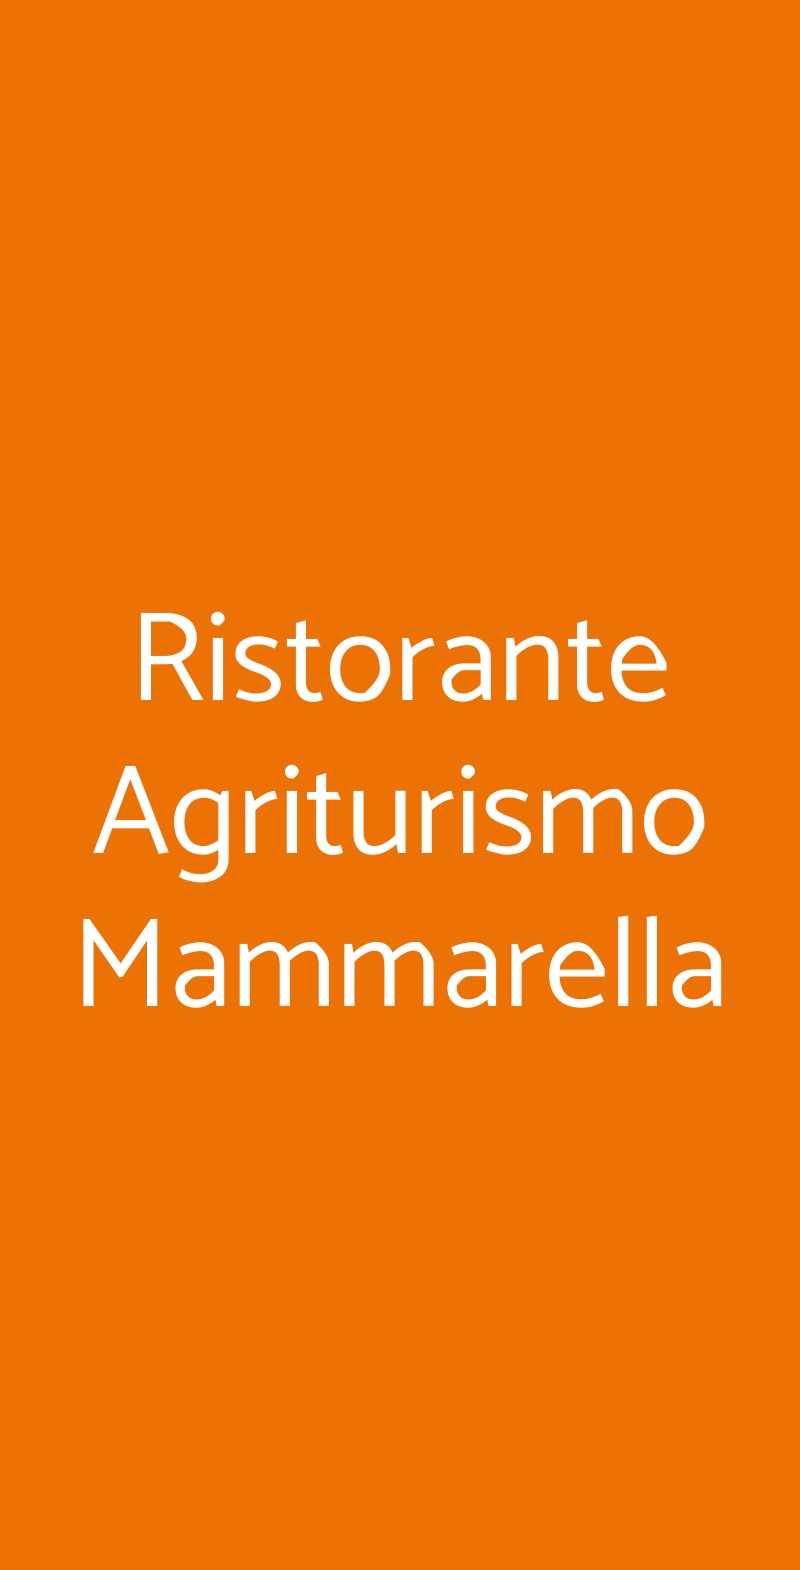 Ristorante Agriturismo Mammarella Altavilla Silentina menù 1 pagina